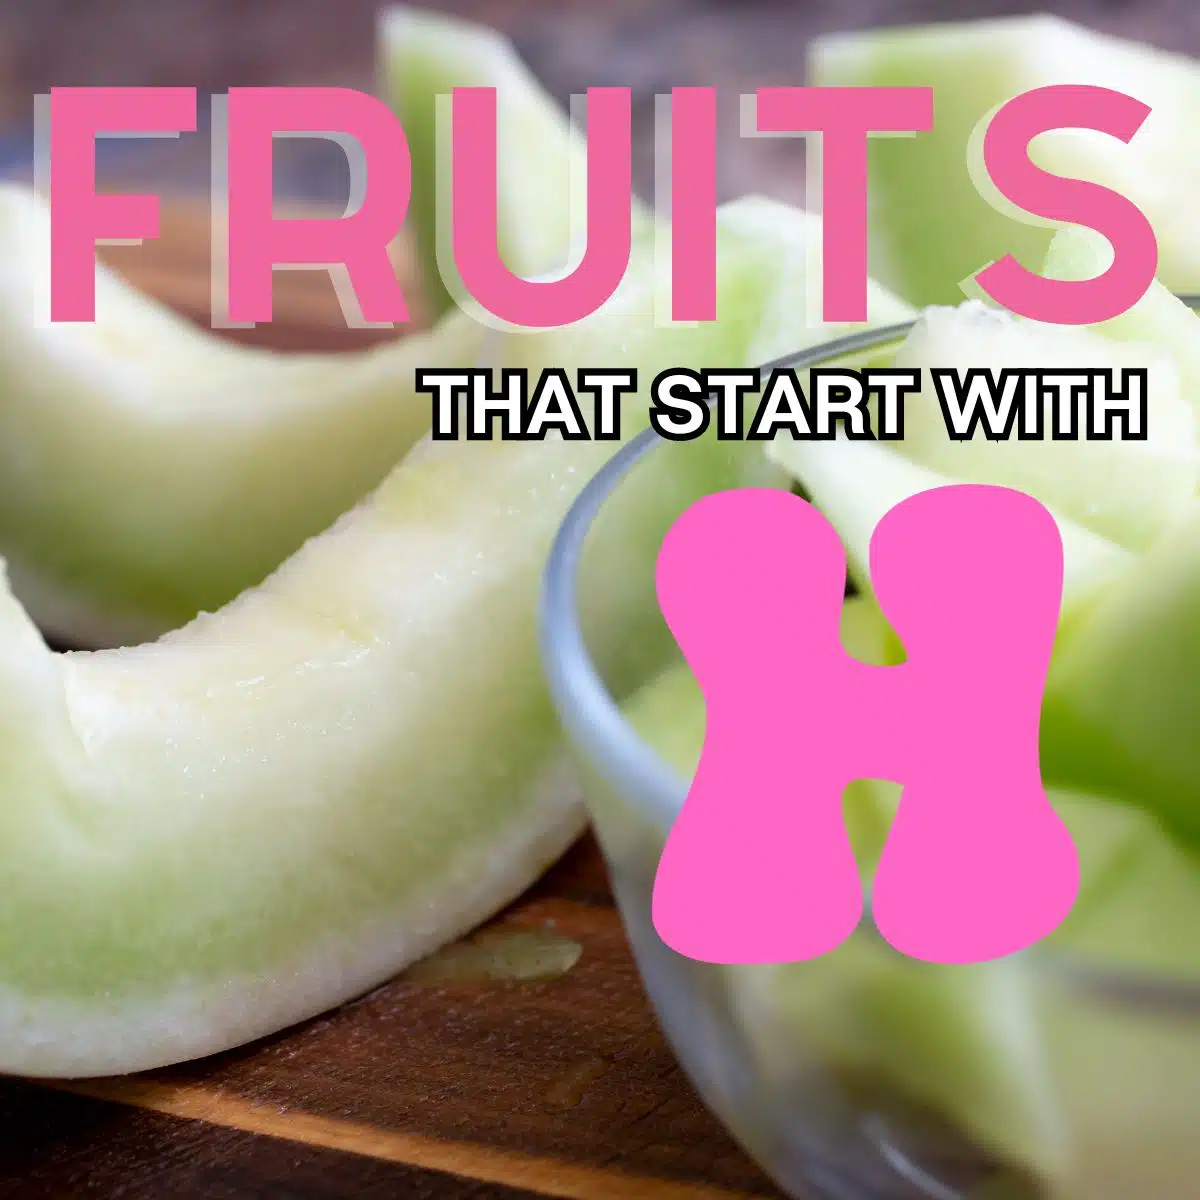 Kvadratna slika za voće koje počinje slovom H.